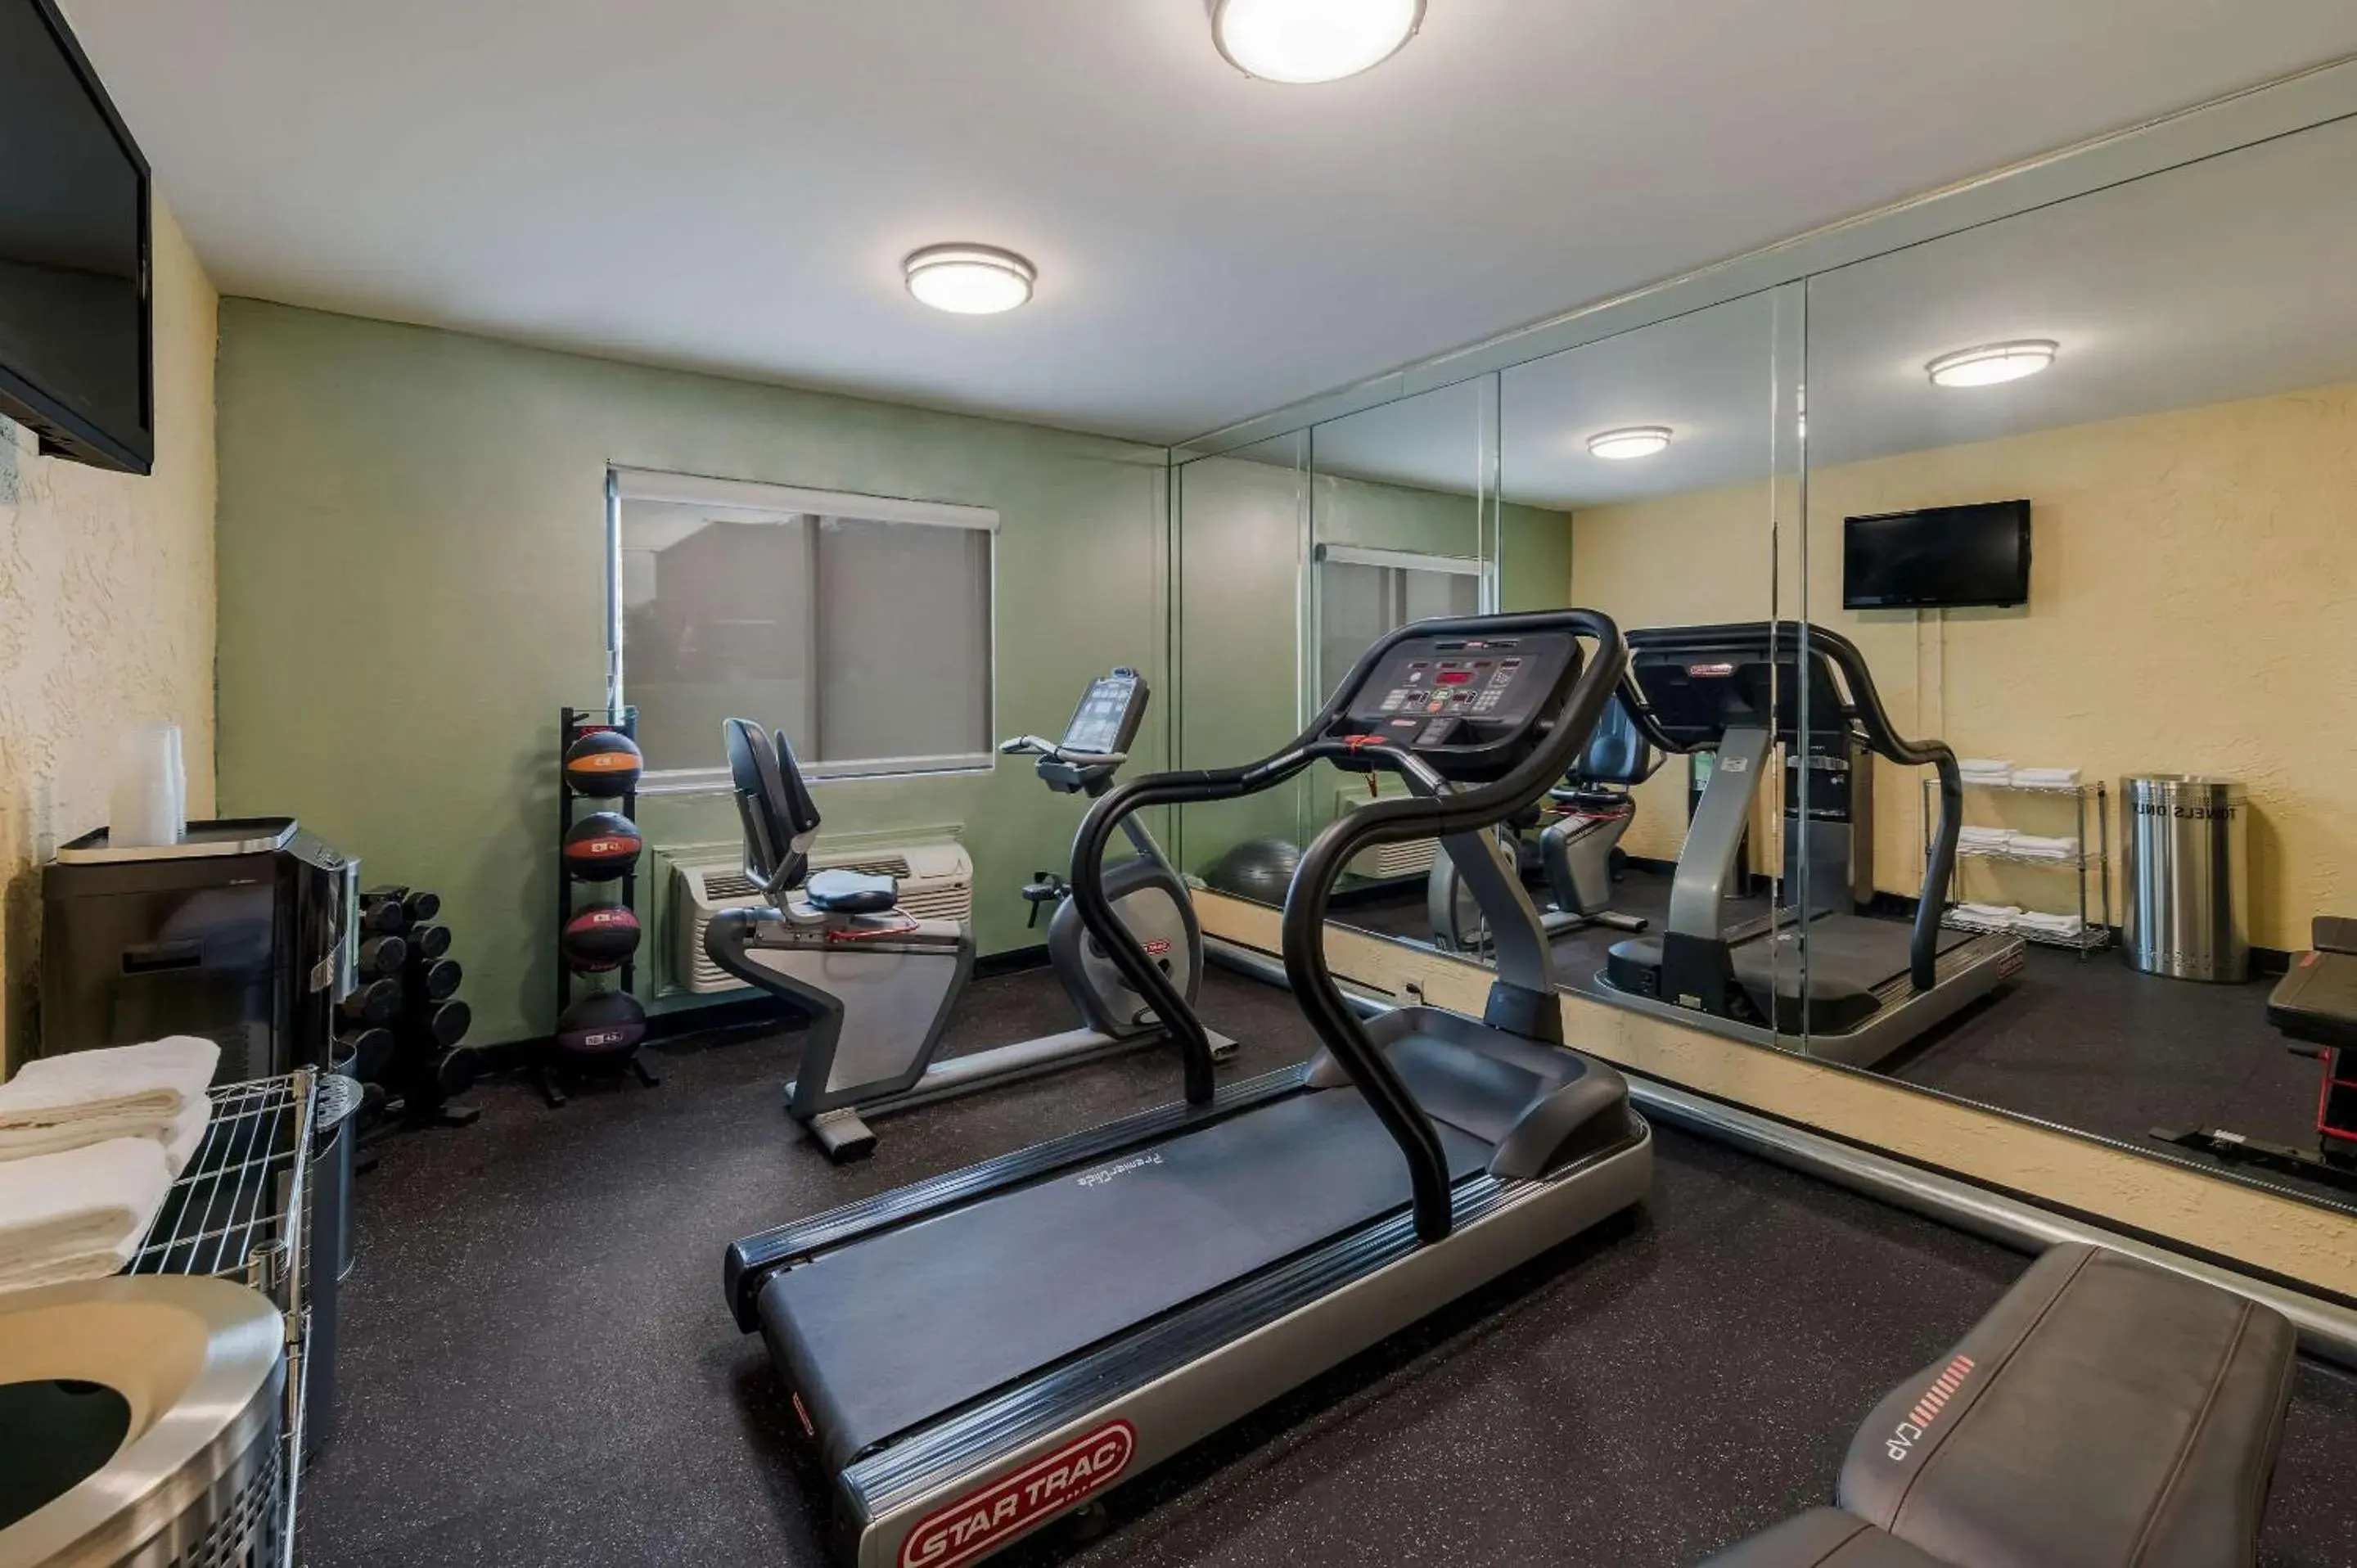 Fitness centre/facilities, Fitness Center/Facilities in Quality Inn - Denton